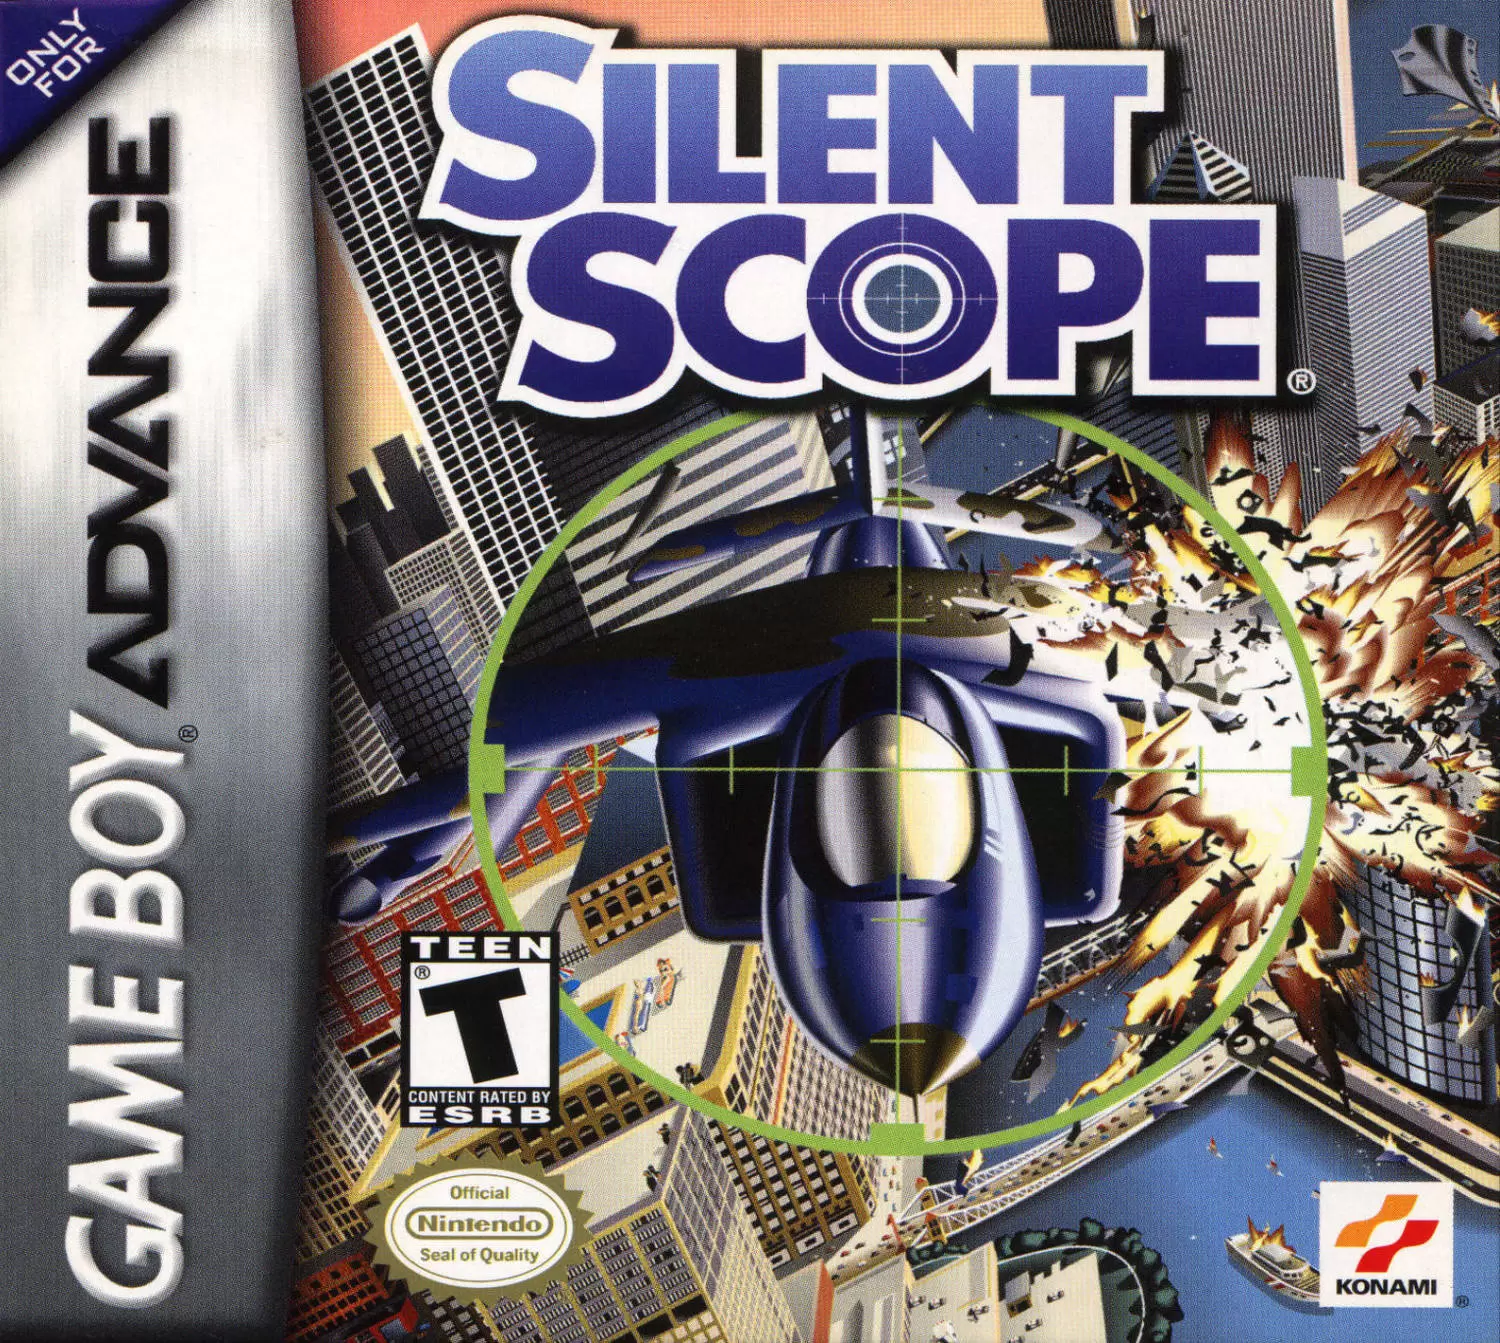 Game Boy Advance Games - Silent Scope